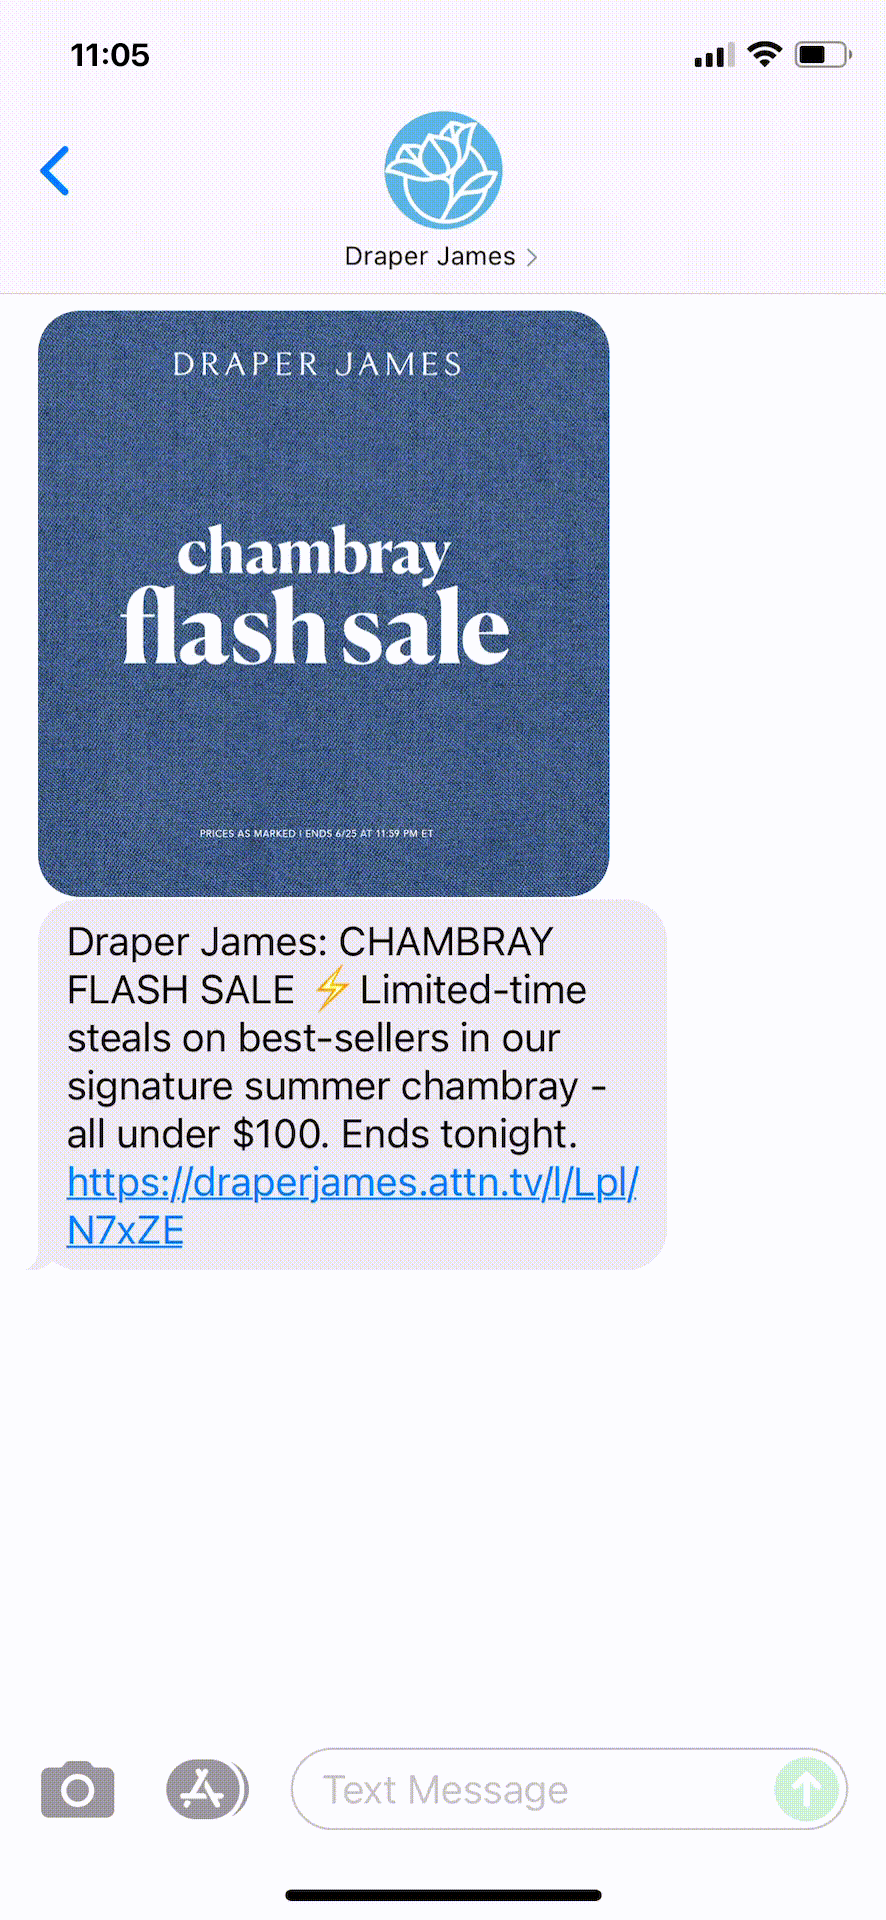 Draper-James-Text-Message-Marketing-Example-06.25.2021